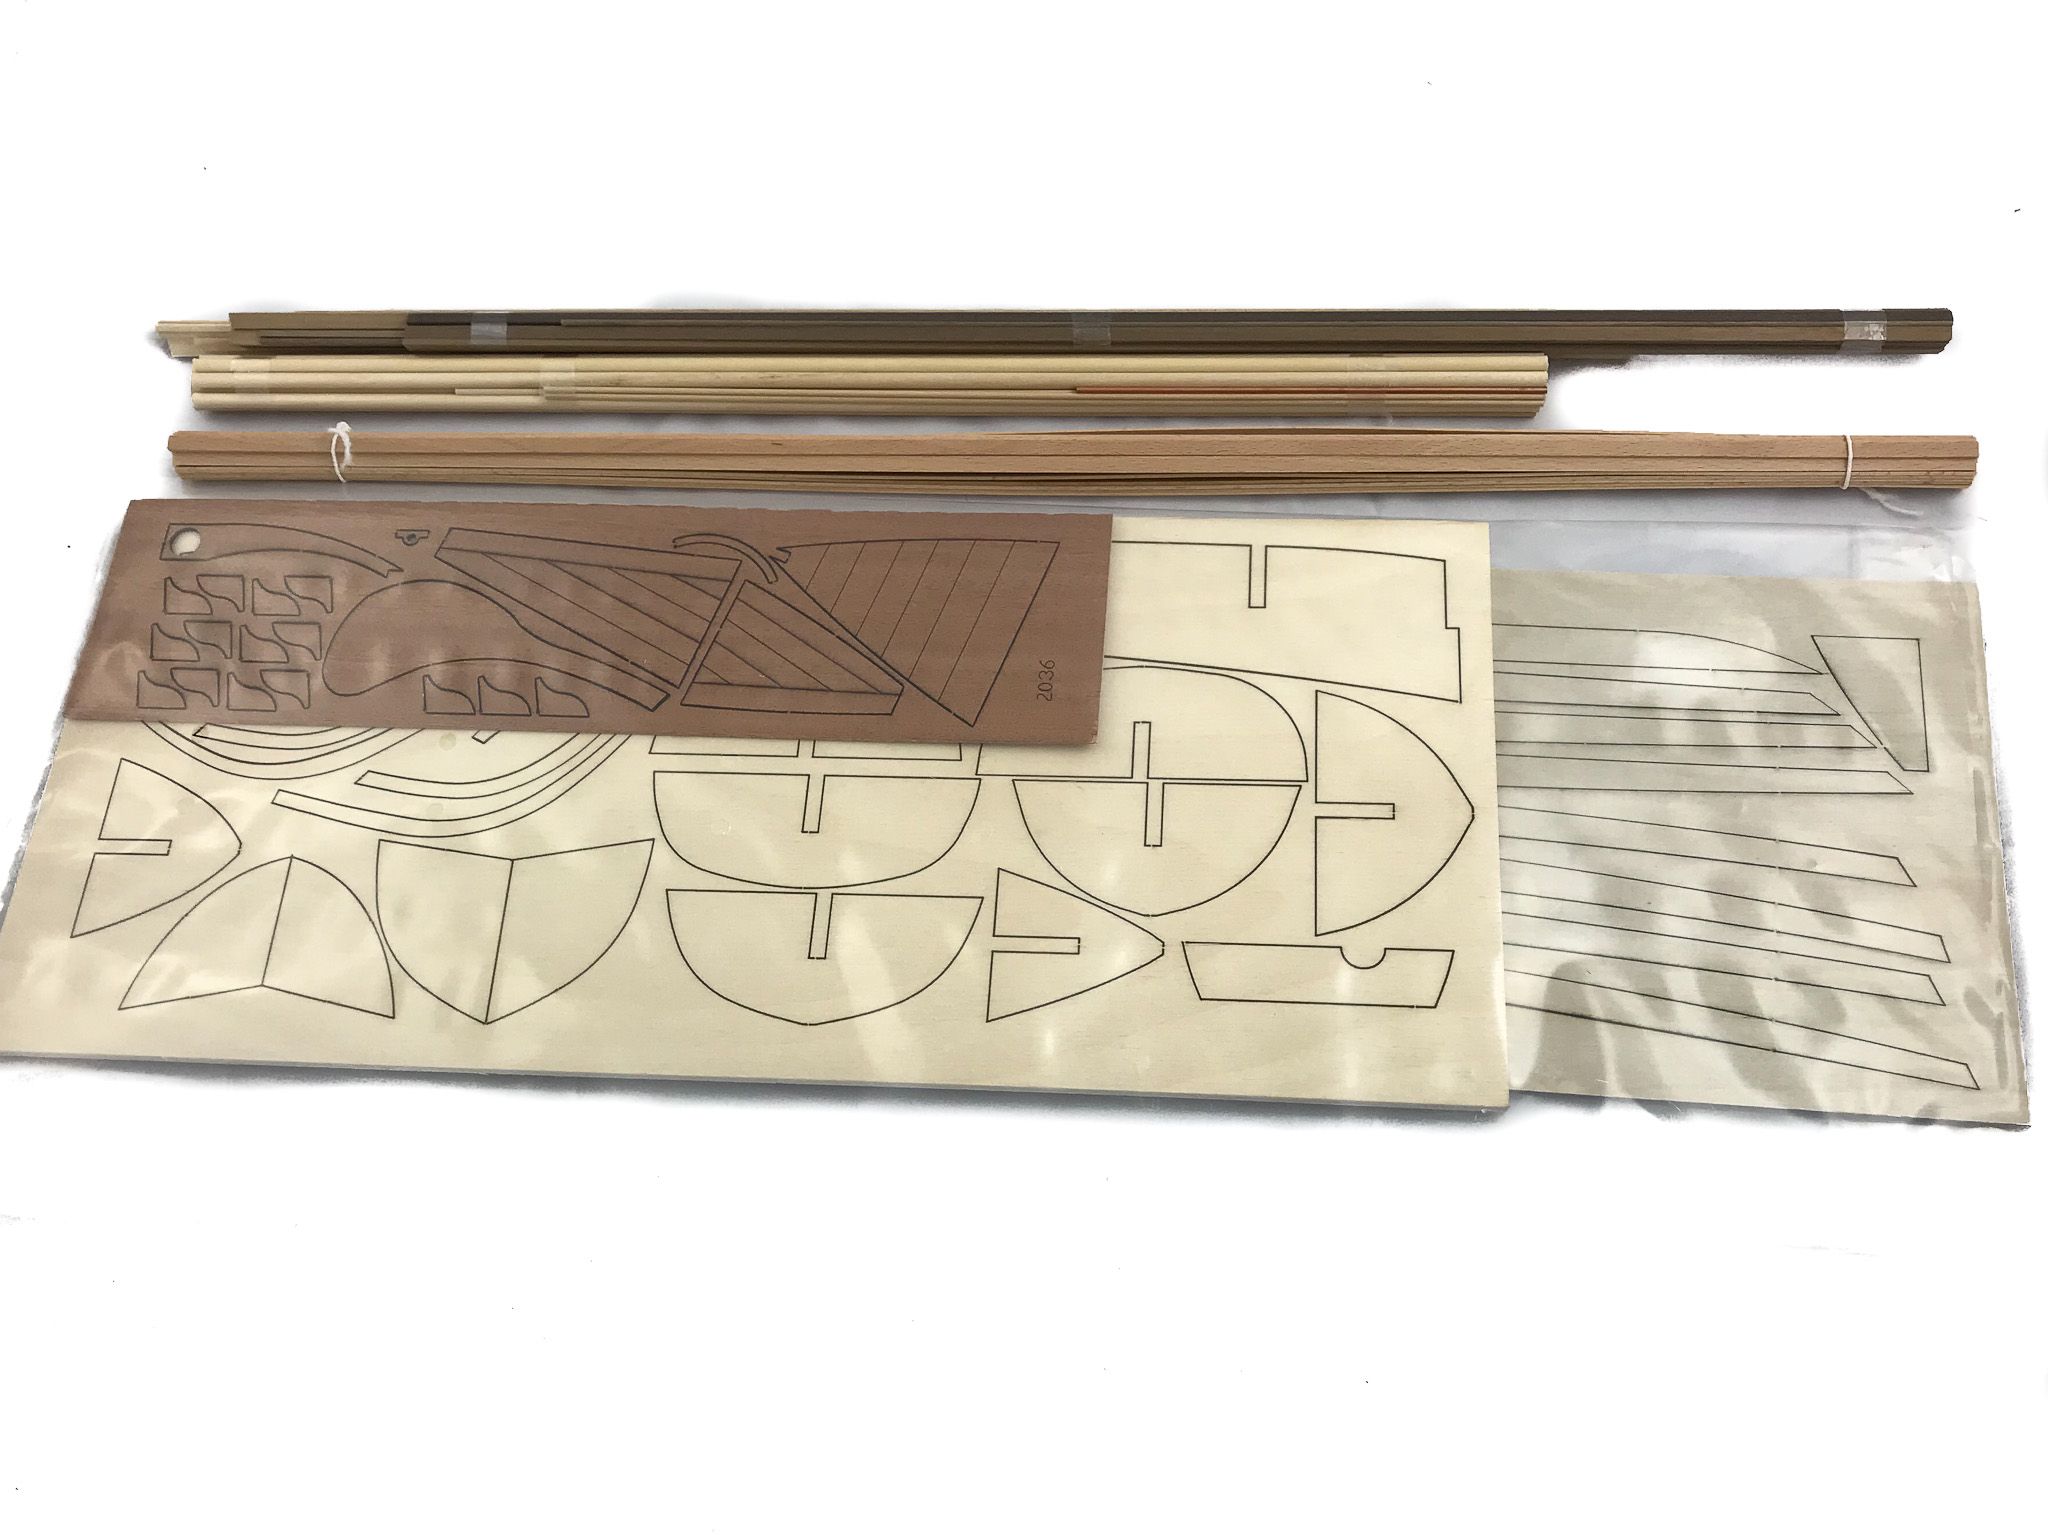 Whale Boat Model Kit - Amati (1440)